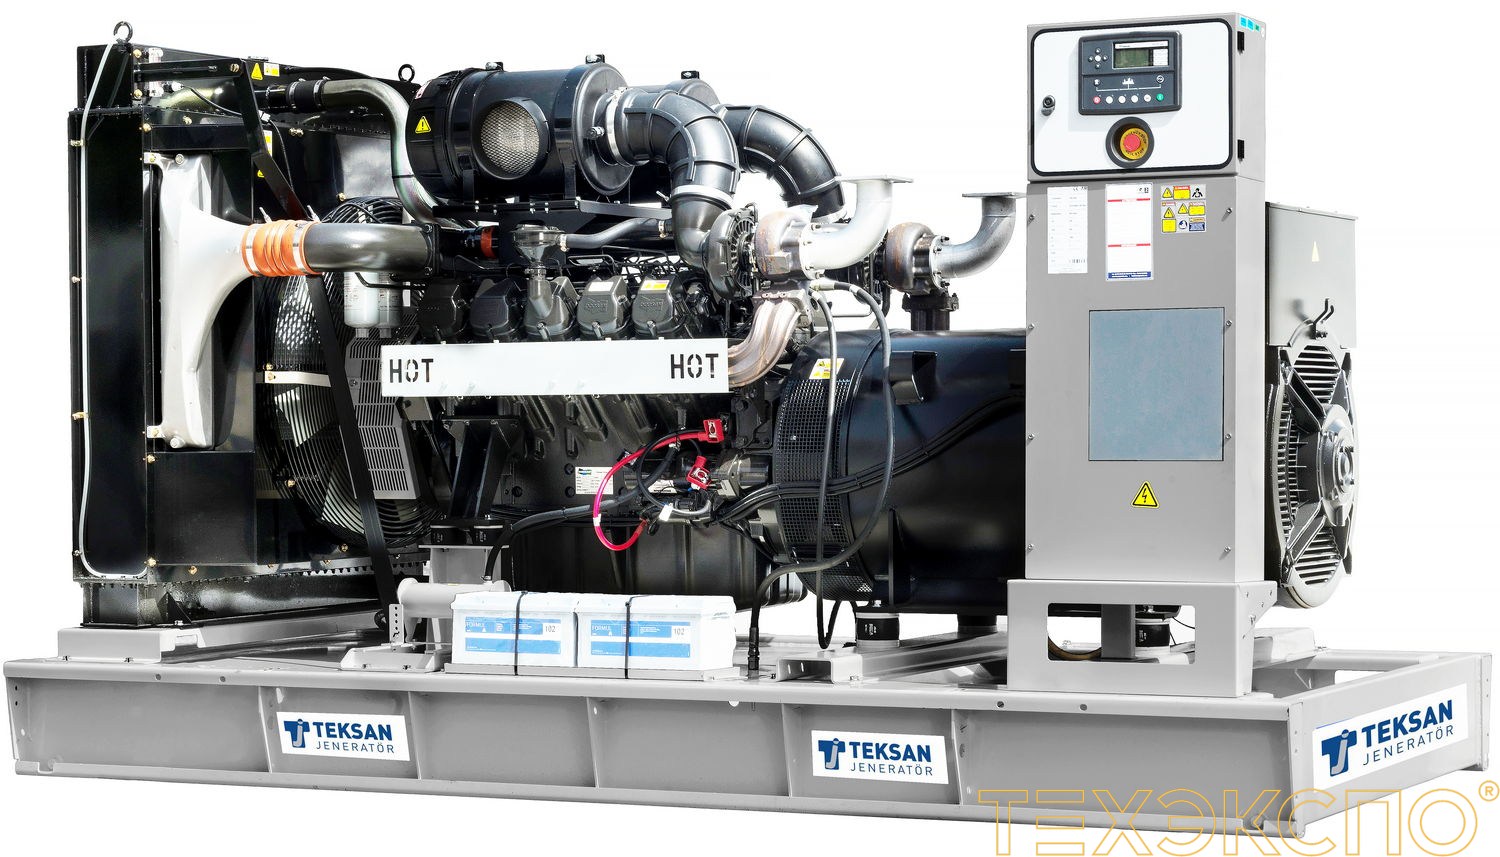 Teksan TJ704DW5C - ДЭС 510 кВт в Санкт-Петербурге за 4 810 265 рублей | Дизельная электростанция в Техэкспо